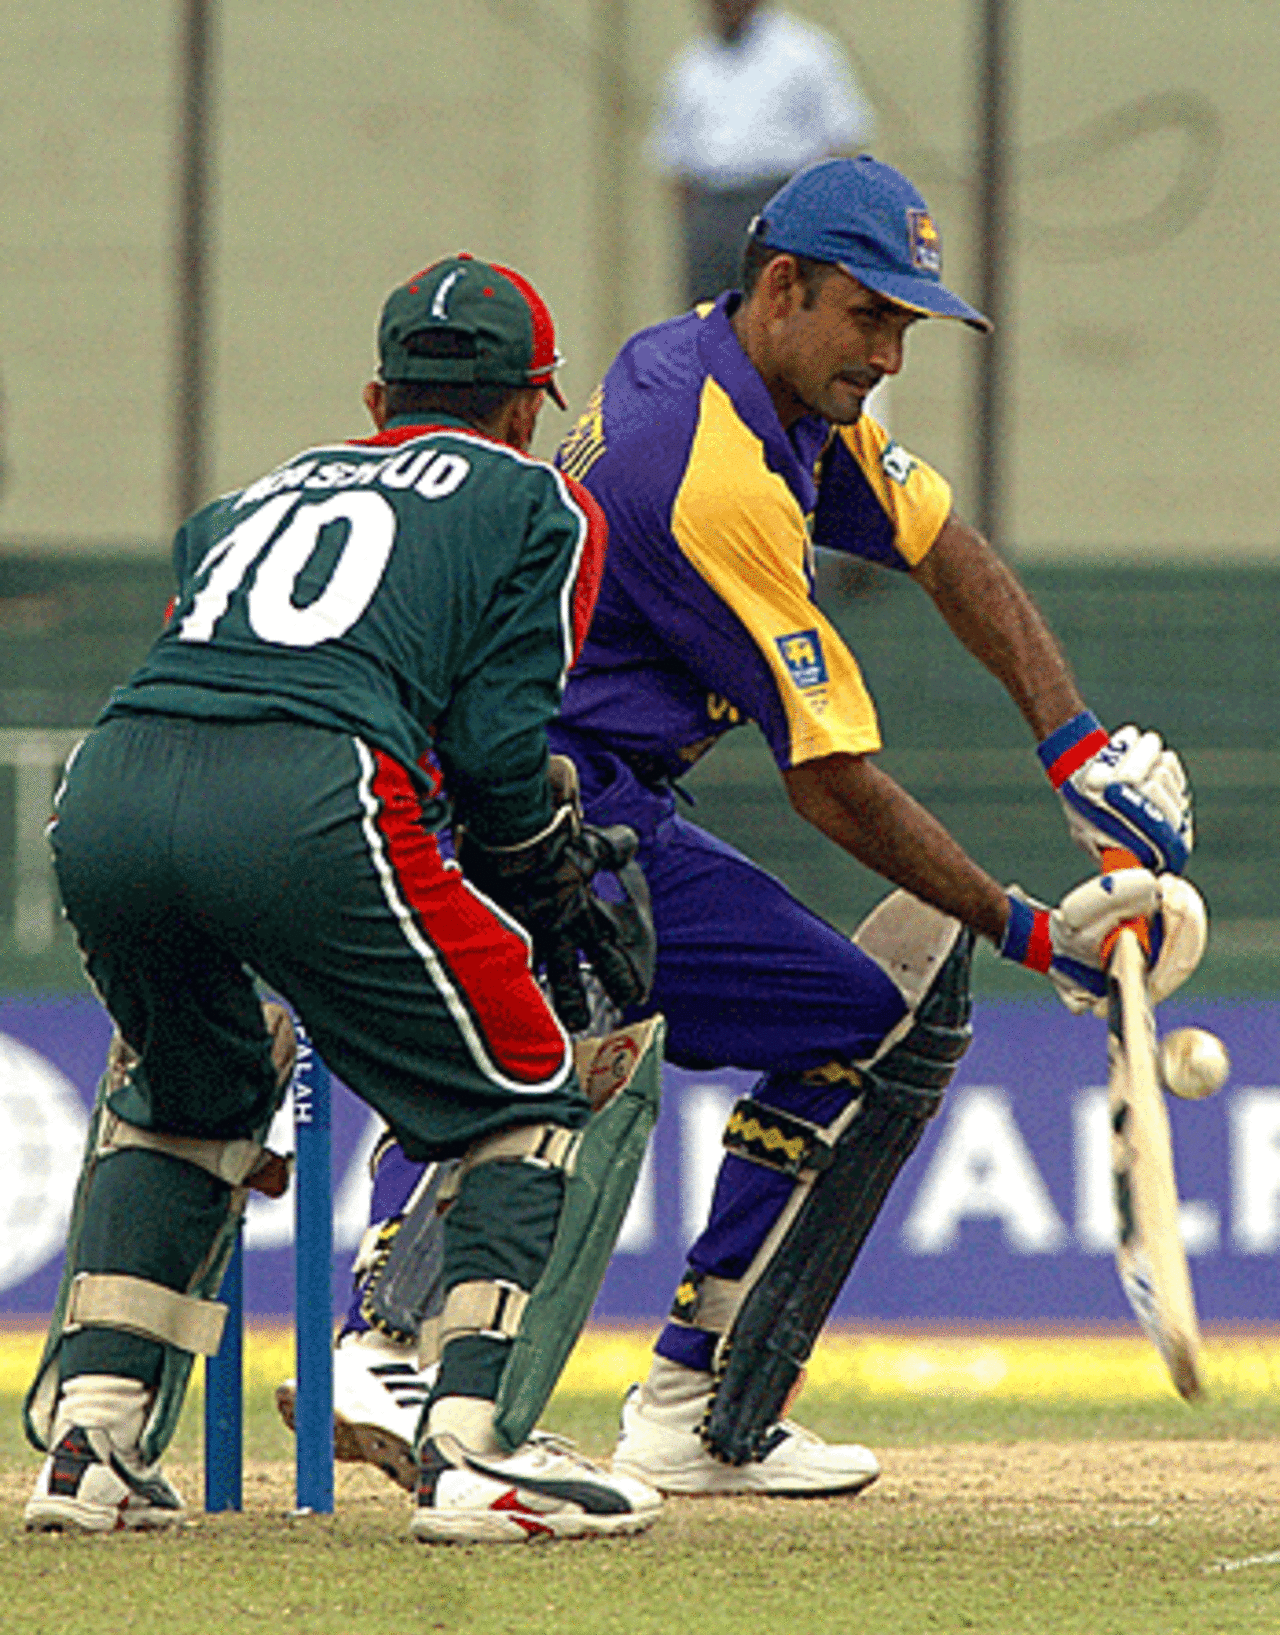 Marvan Atapattu glides the ball past Khaled Mashud, Sri Lanka v Bangladesh, Sinhalese Sports Club Ground, Colombo, August 31, 2005